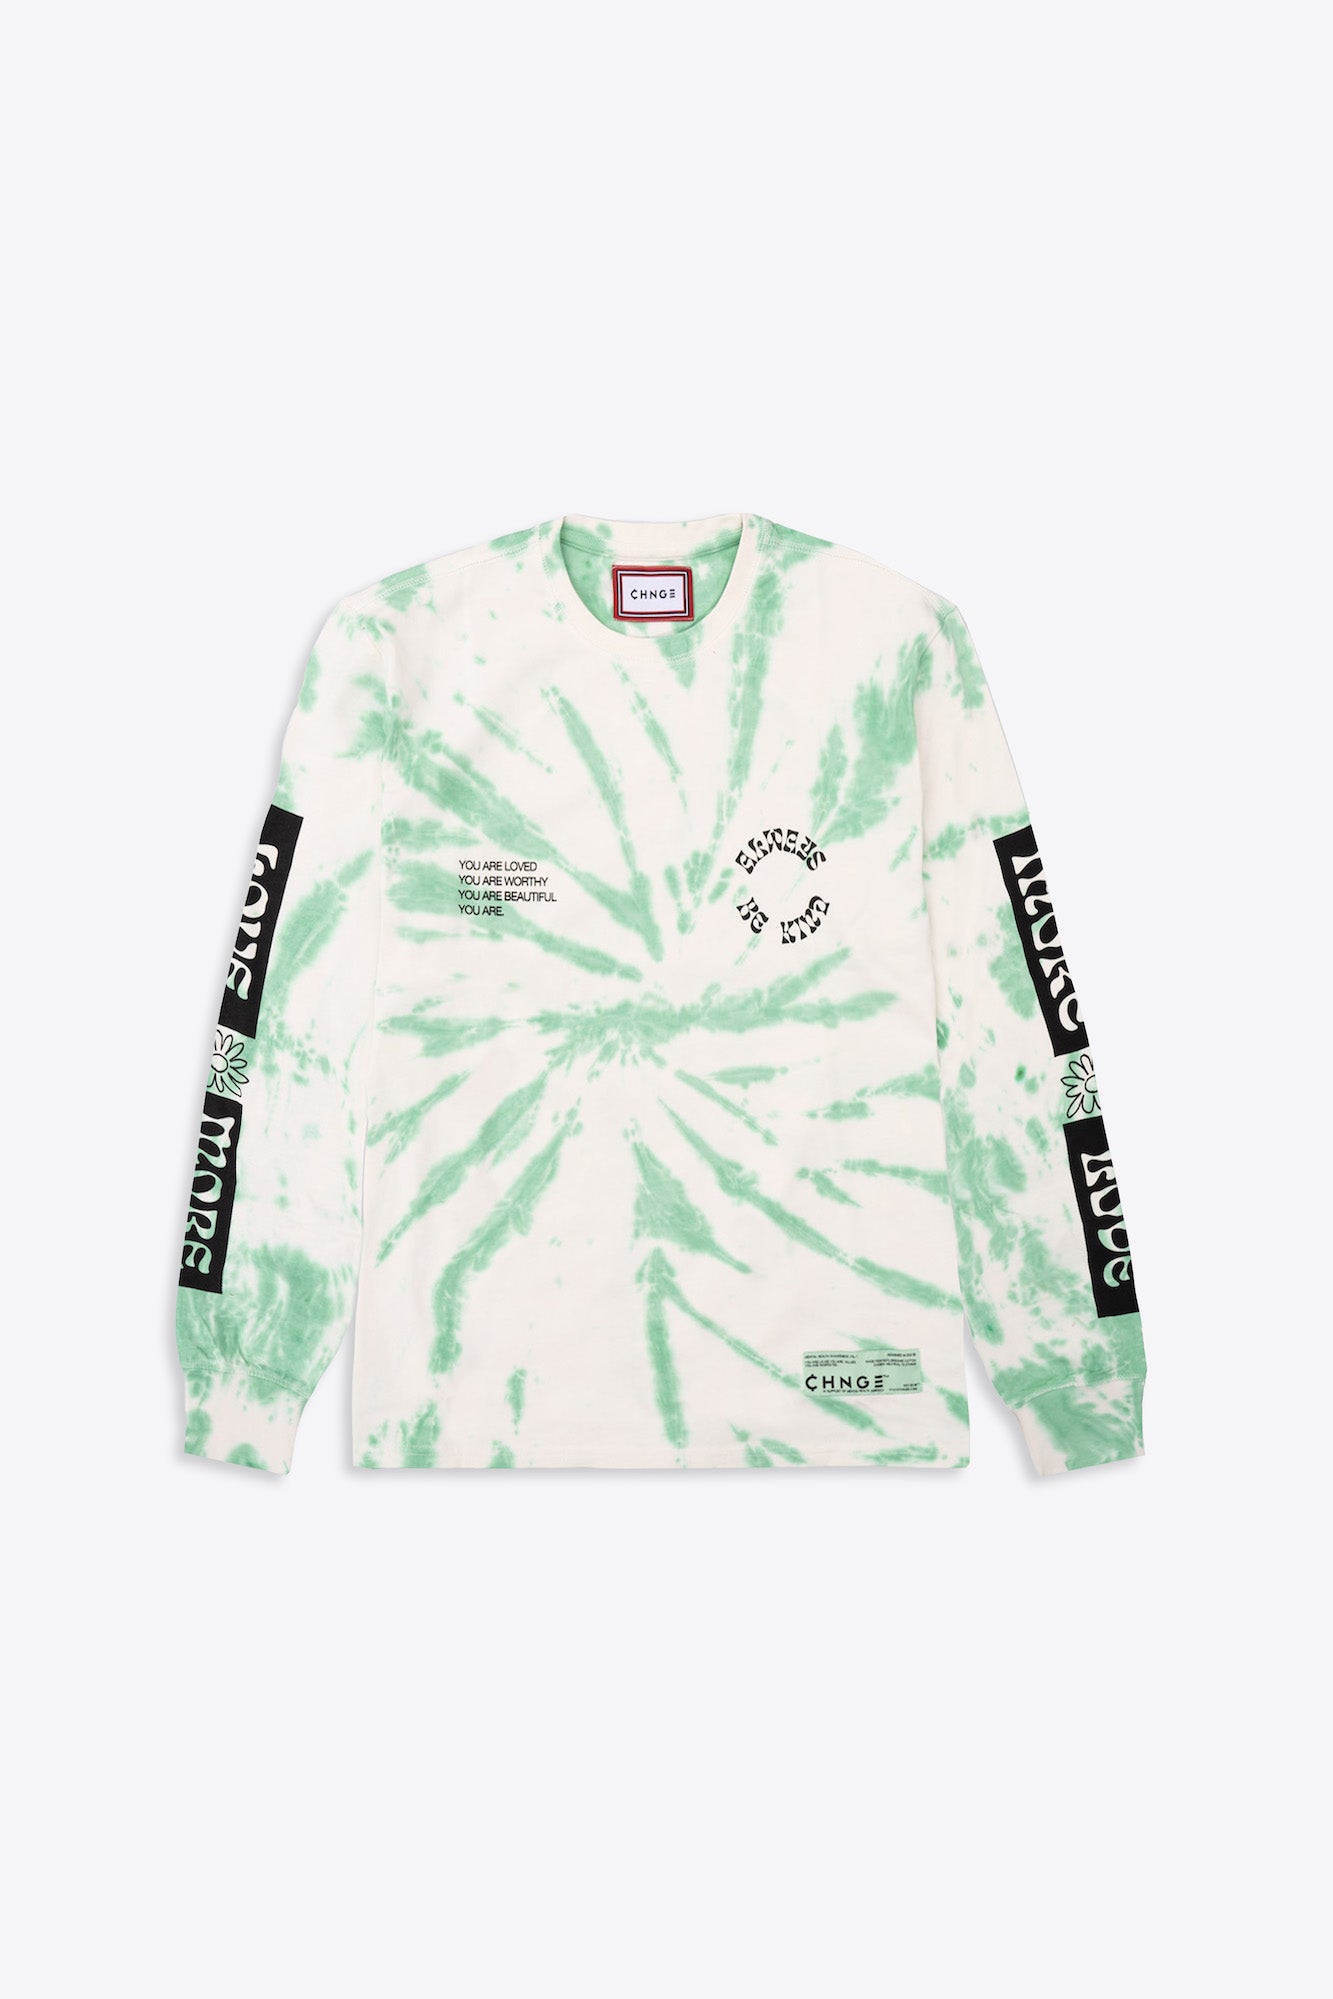 L/S T-Shirt $47 More TD) Love Spiral Cuffed (Green